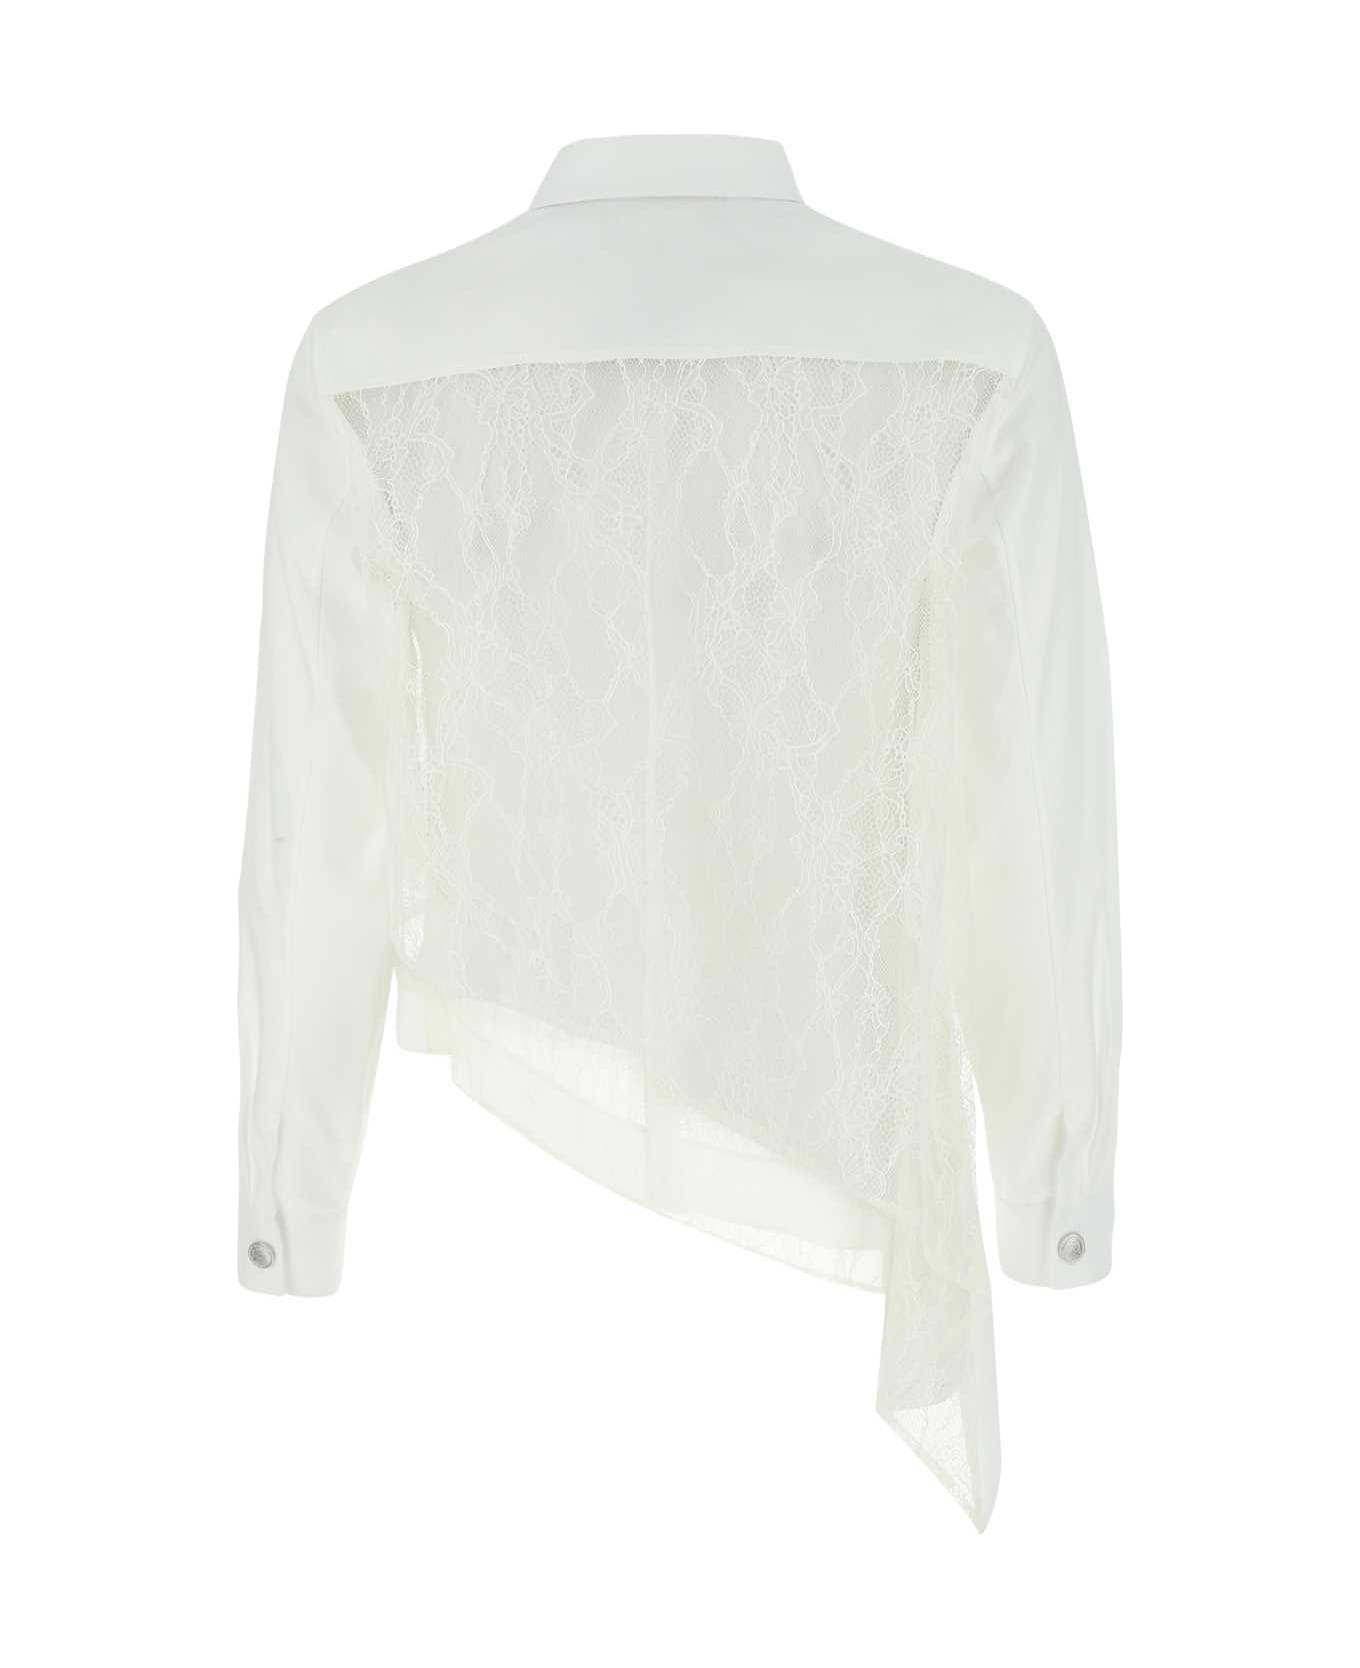 Koché White Cotton And Lace Shirt - 100